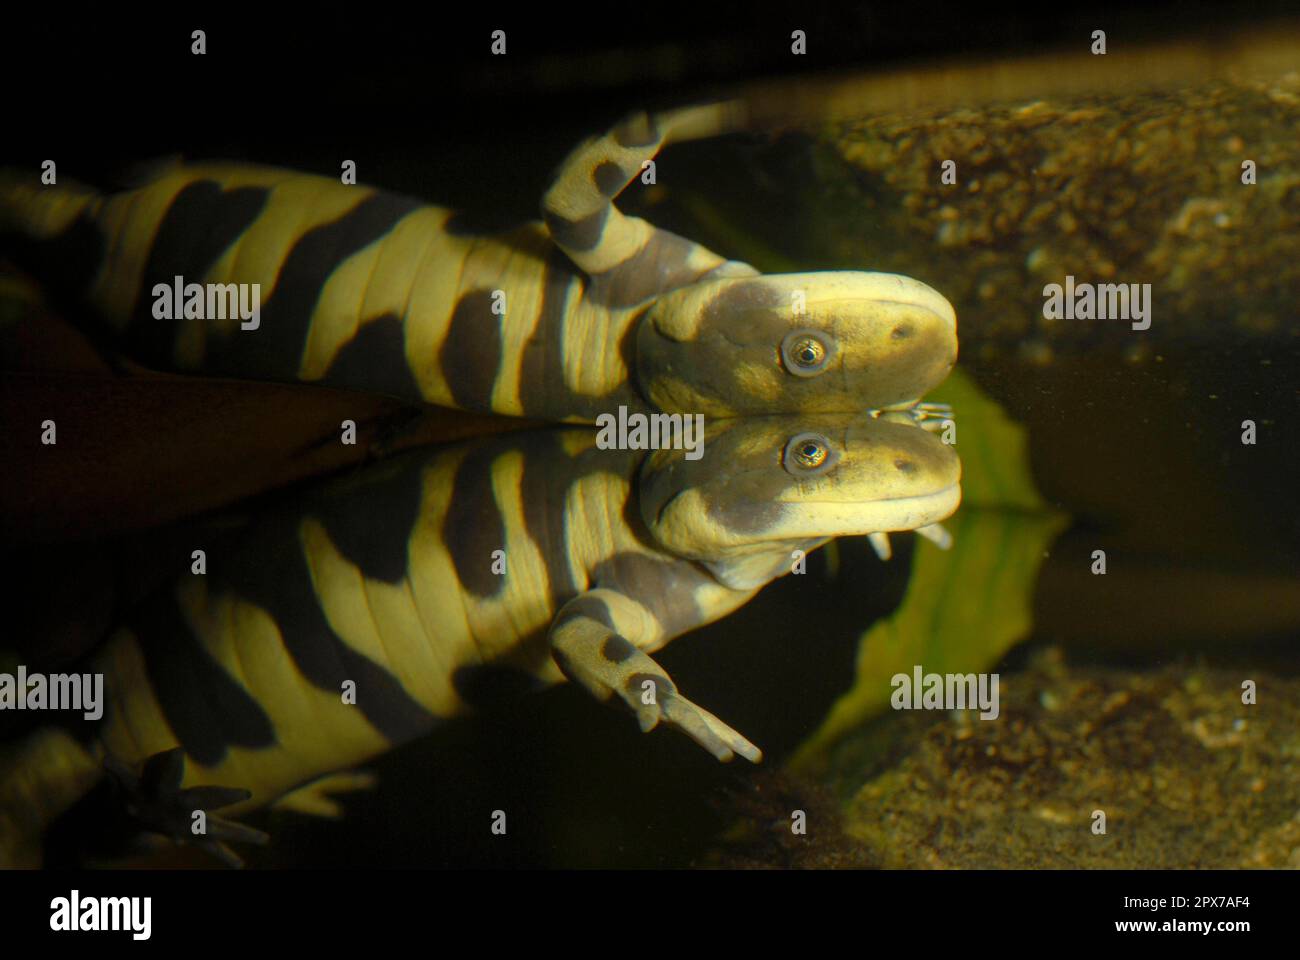 Salamandra tigre Foto Stock